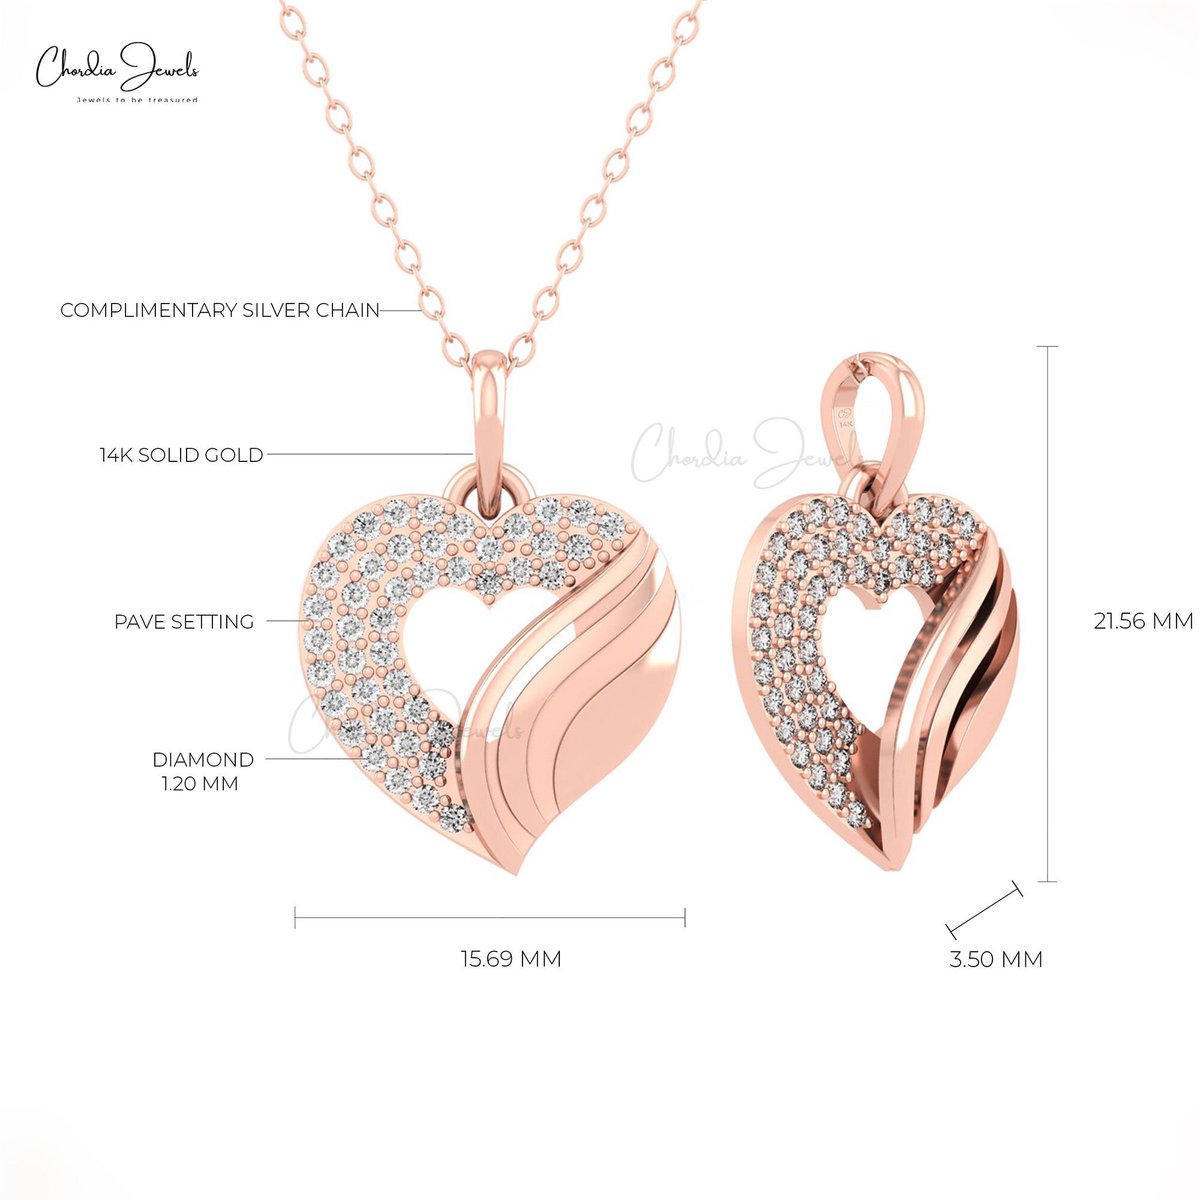 Natural Diamond Open Heart Pendant |
@etsy
#etsyshop #etsyseller #diamondpendant #anniversarygift #newyeargift #engagmentgift #jewelry #fashion #pendantjewelry  etsy.me/3GoiSCS